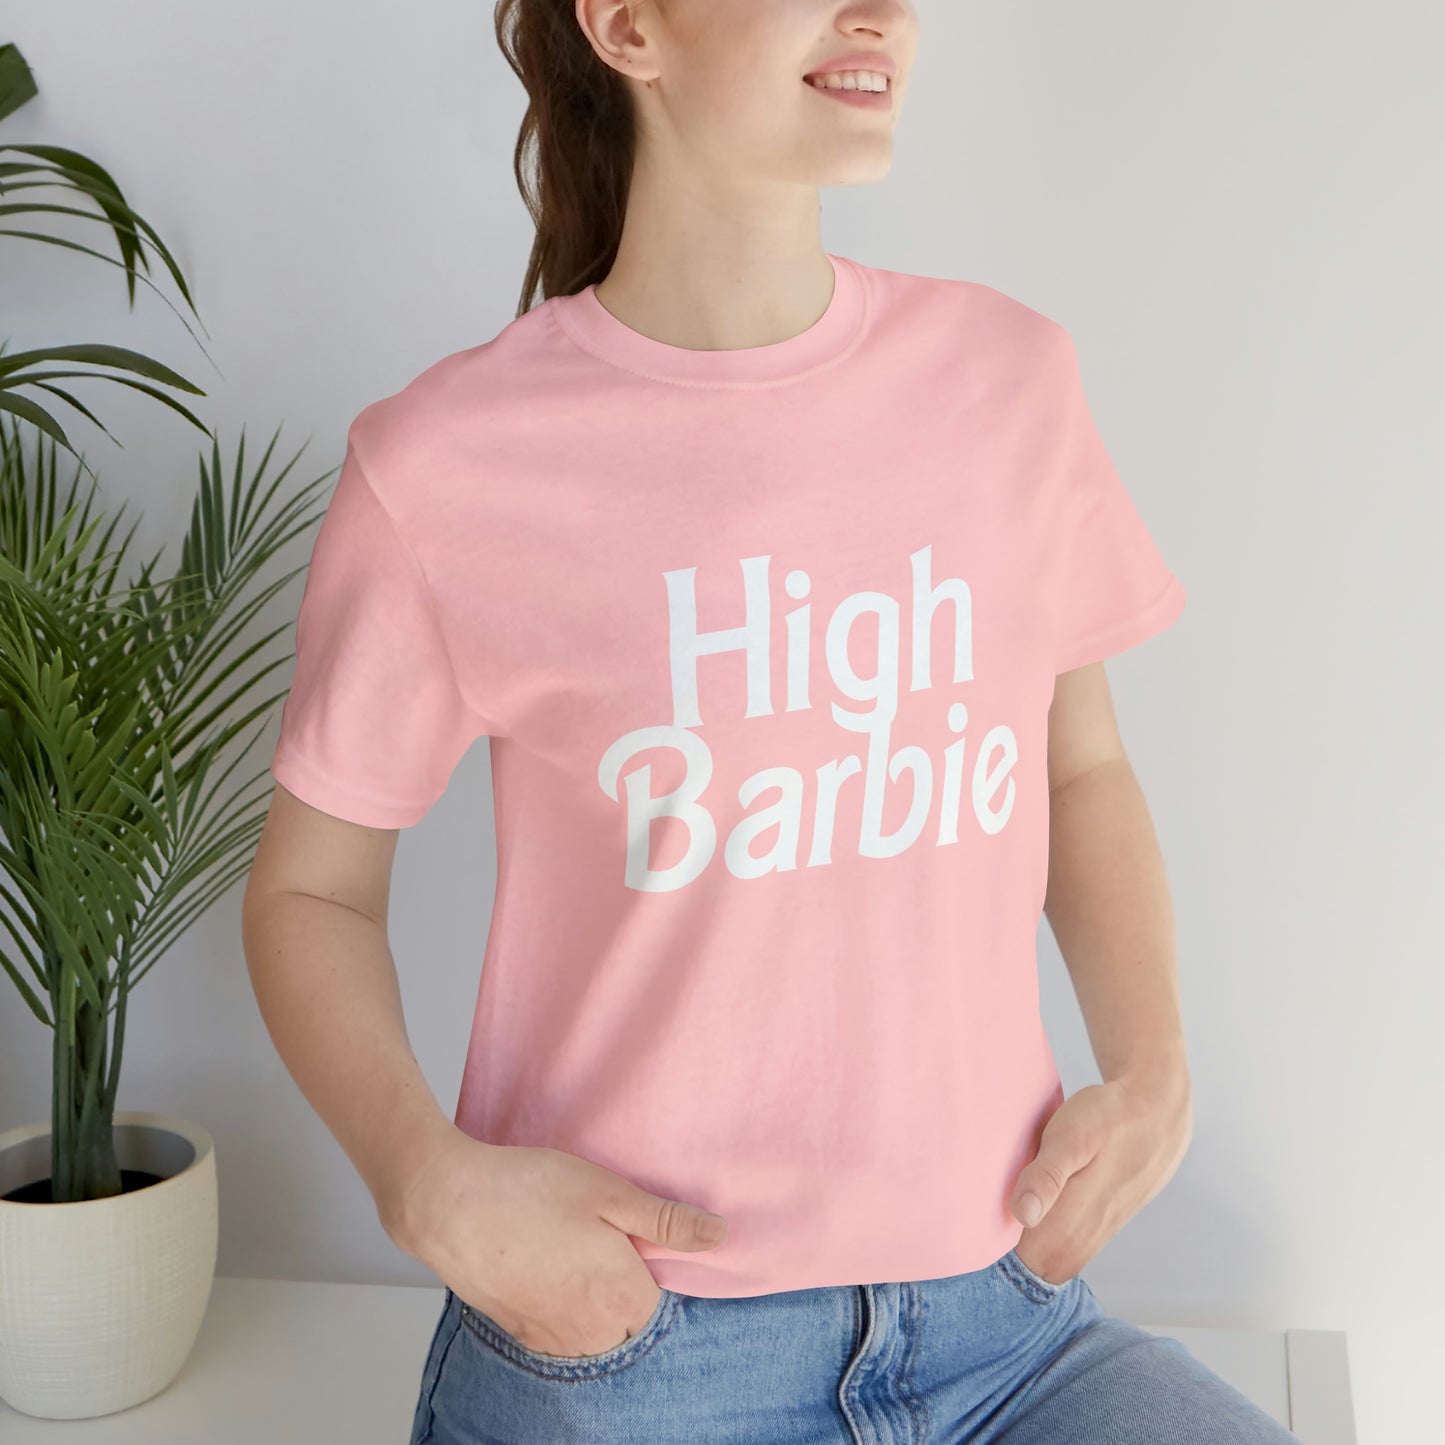 High Barbie